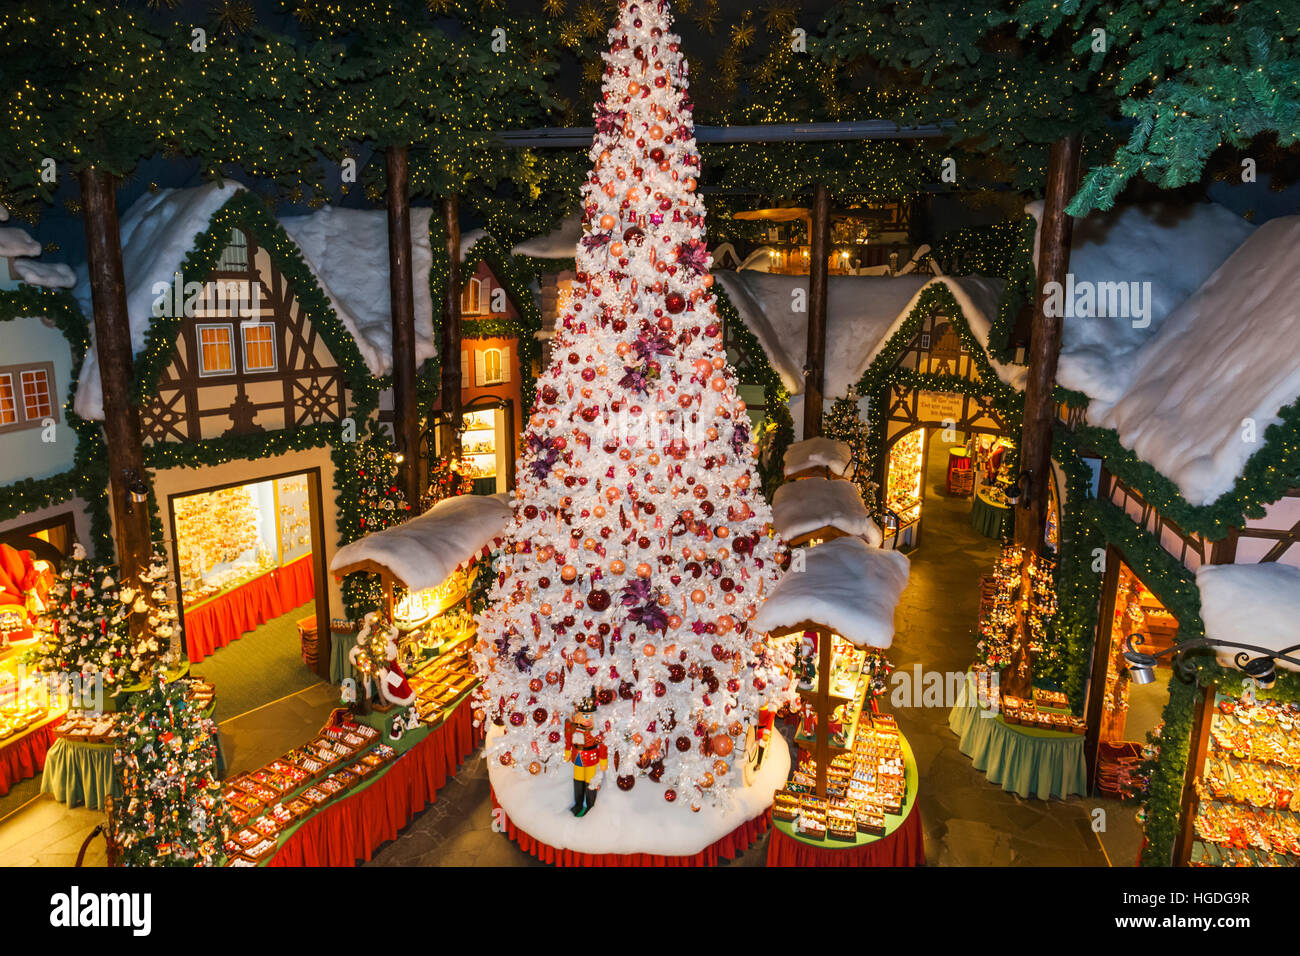 Germany, Bavaria, Romantic Road, Rothenburg-ob-der-Tauber, Kath Wohlfart Christmas Shop, Christmas Tree Stock Photo